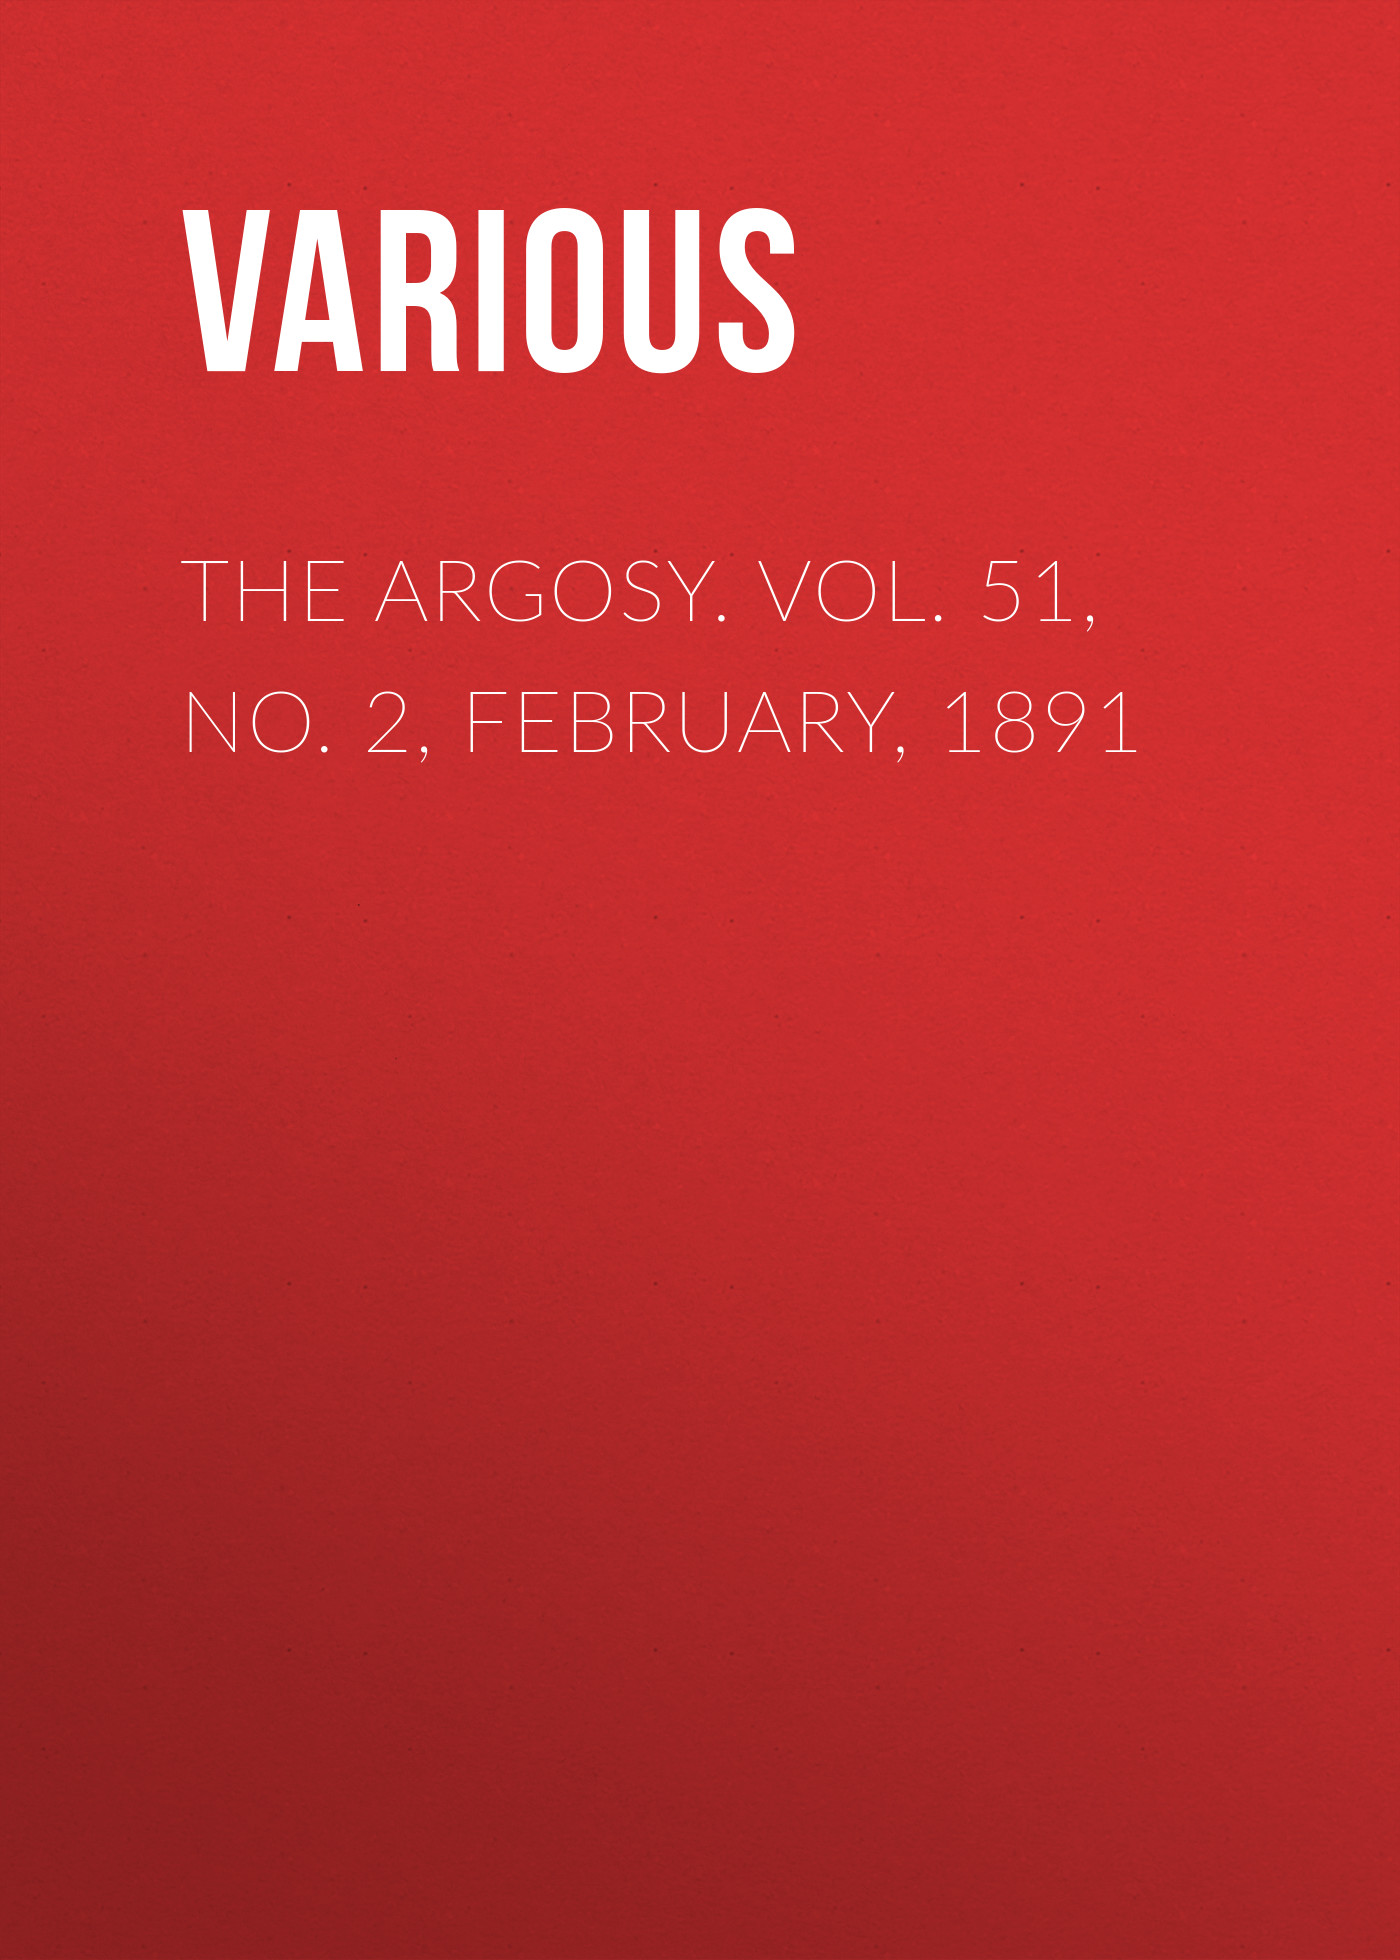 The Argosy. Vol. 51, No. 2, February, 1891